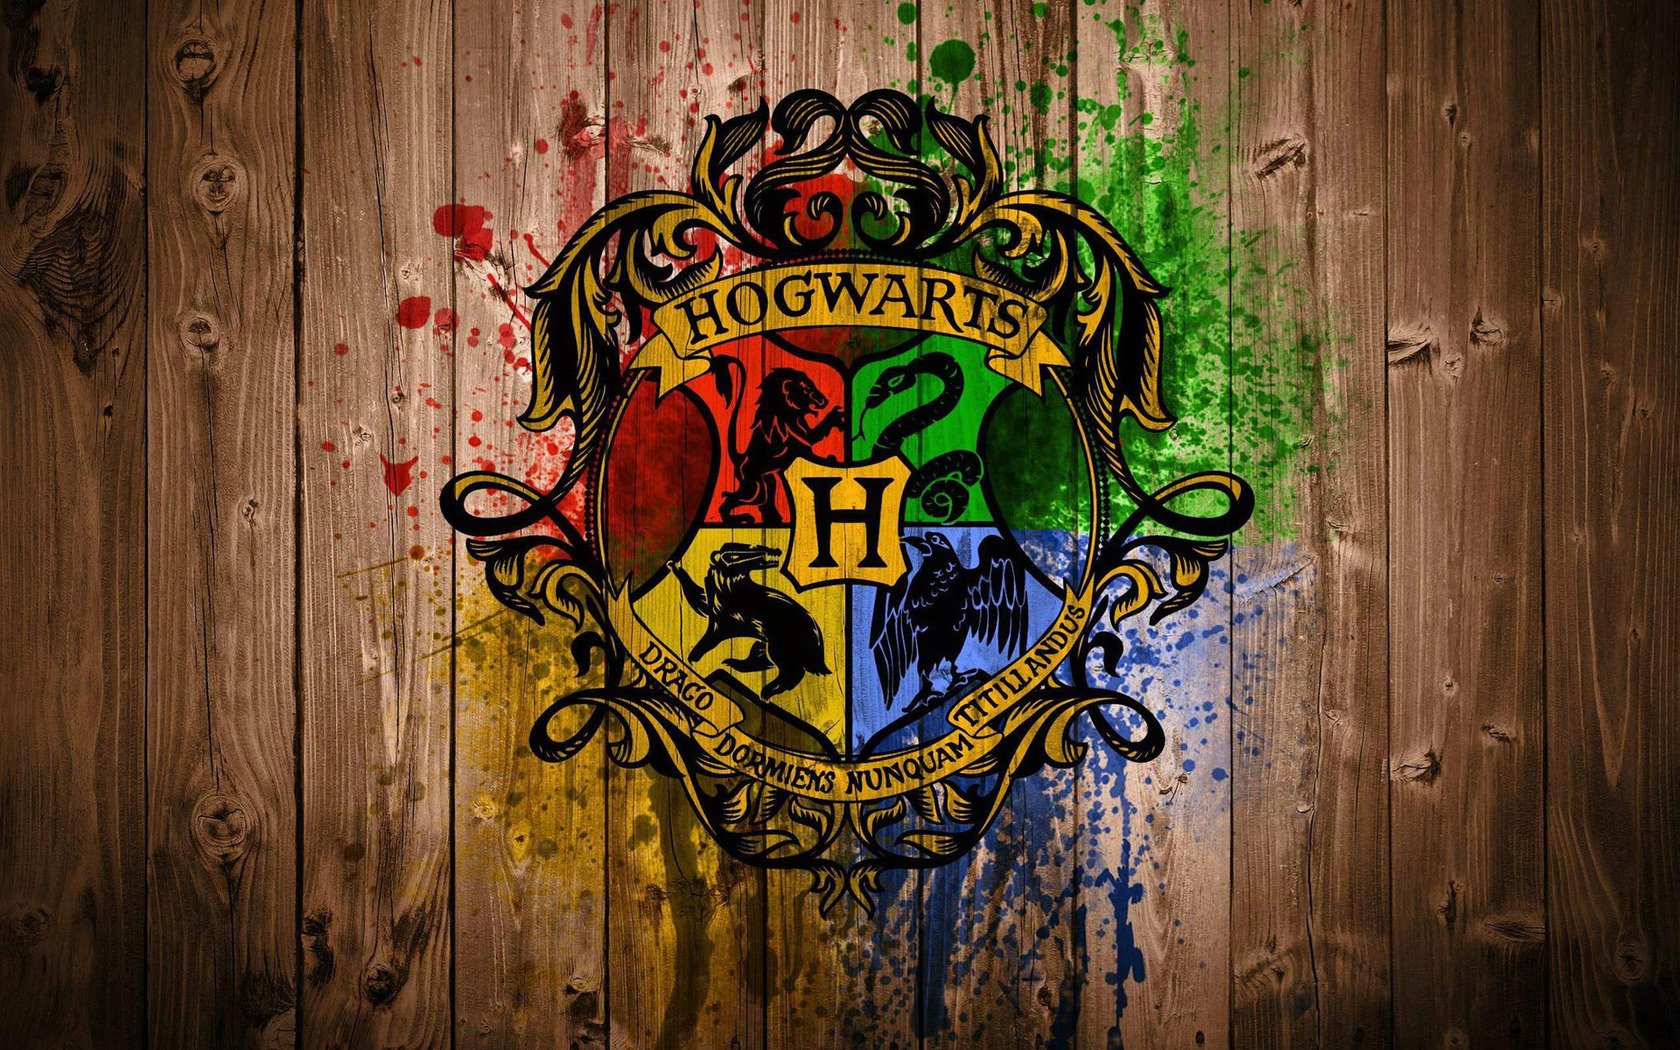 Harry Potter Wallpaper Digital Design